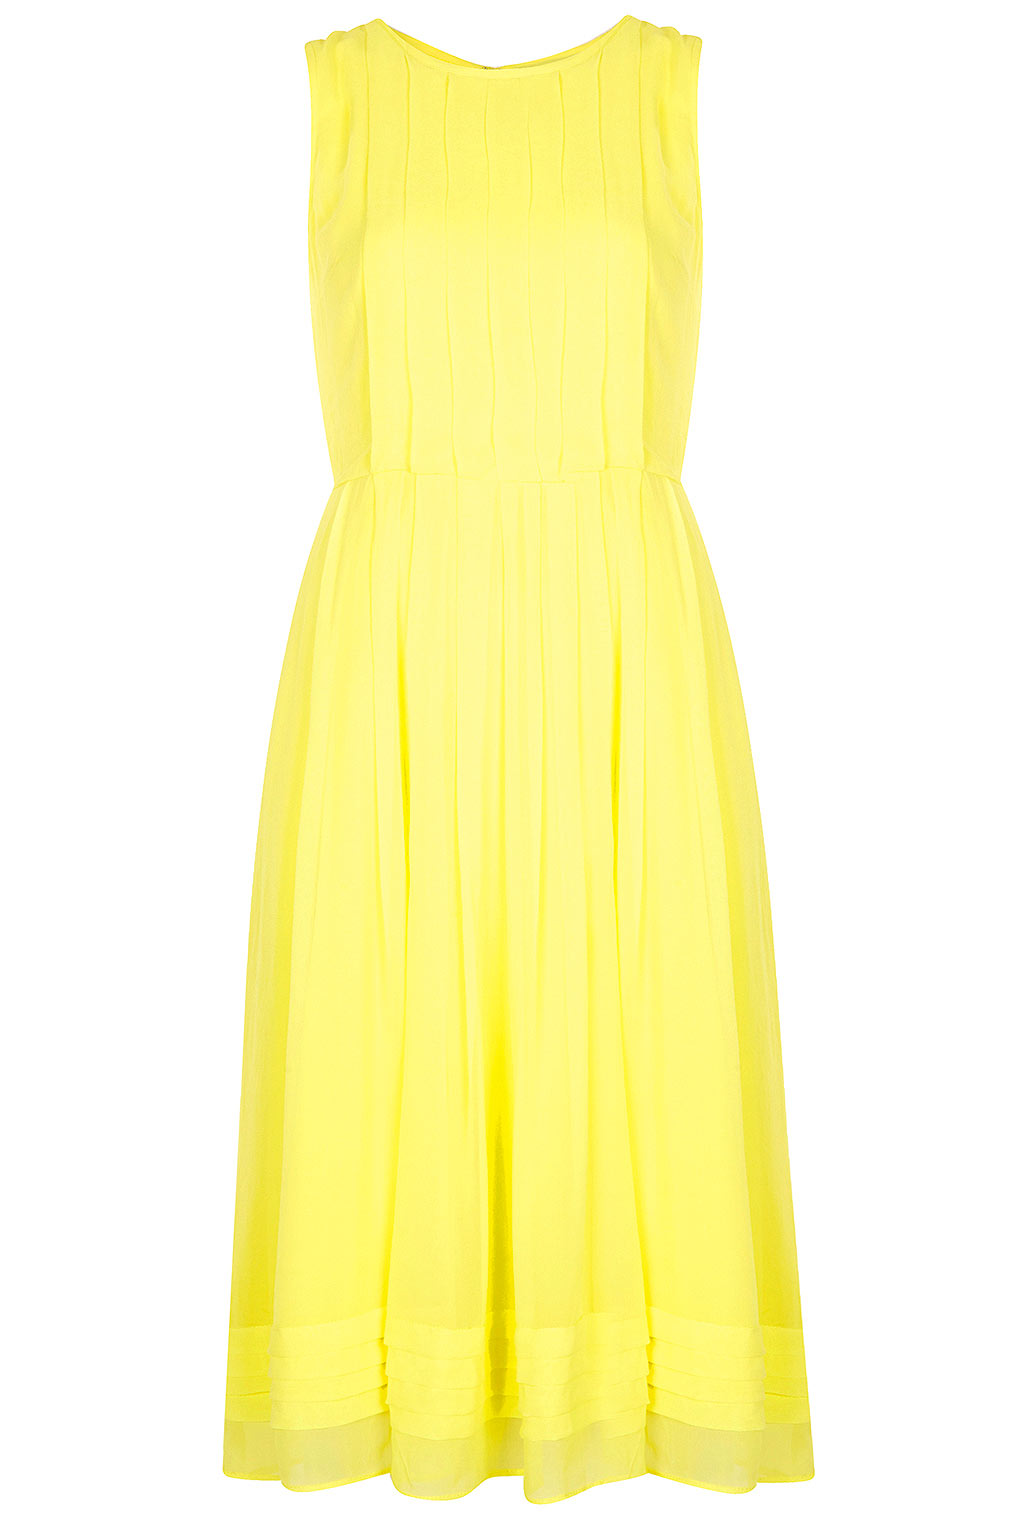 Topshop Poppy Midi Dress in Yellow | Lyst